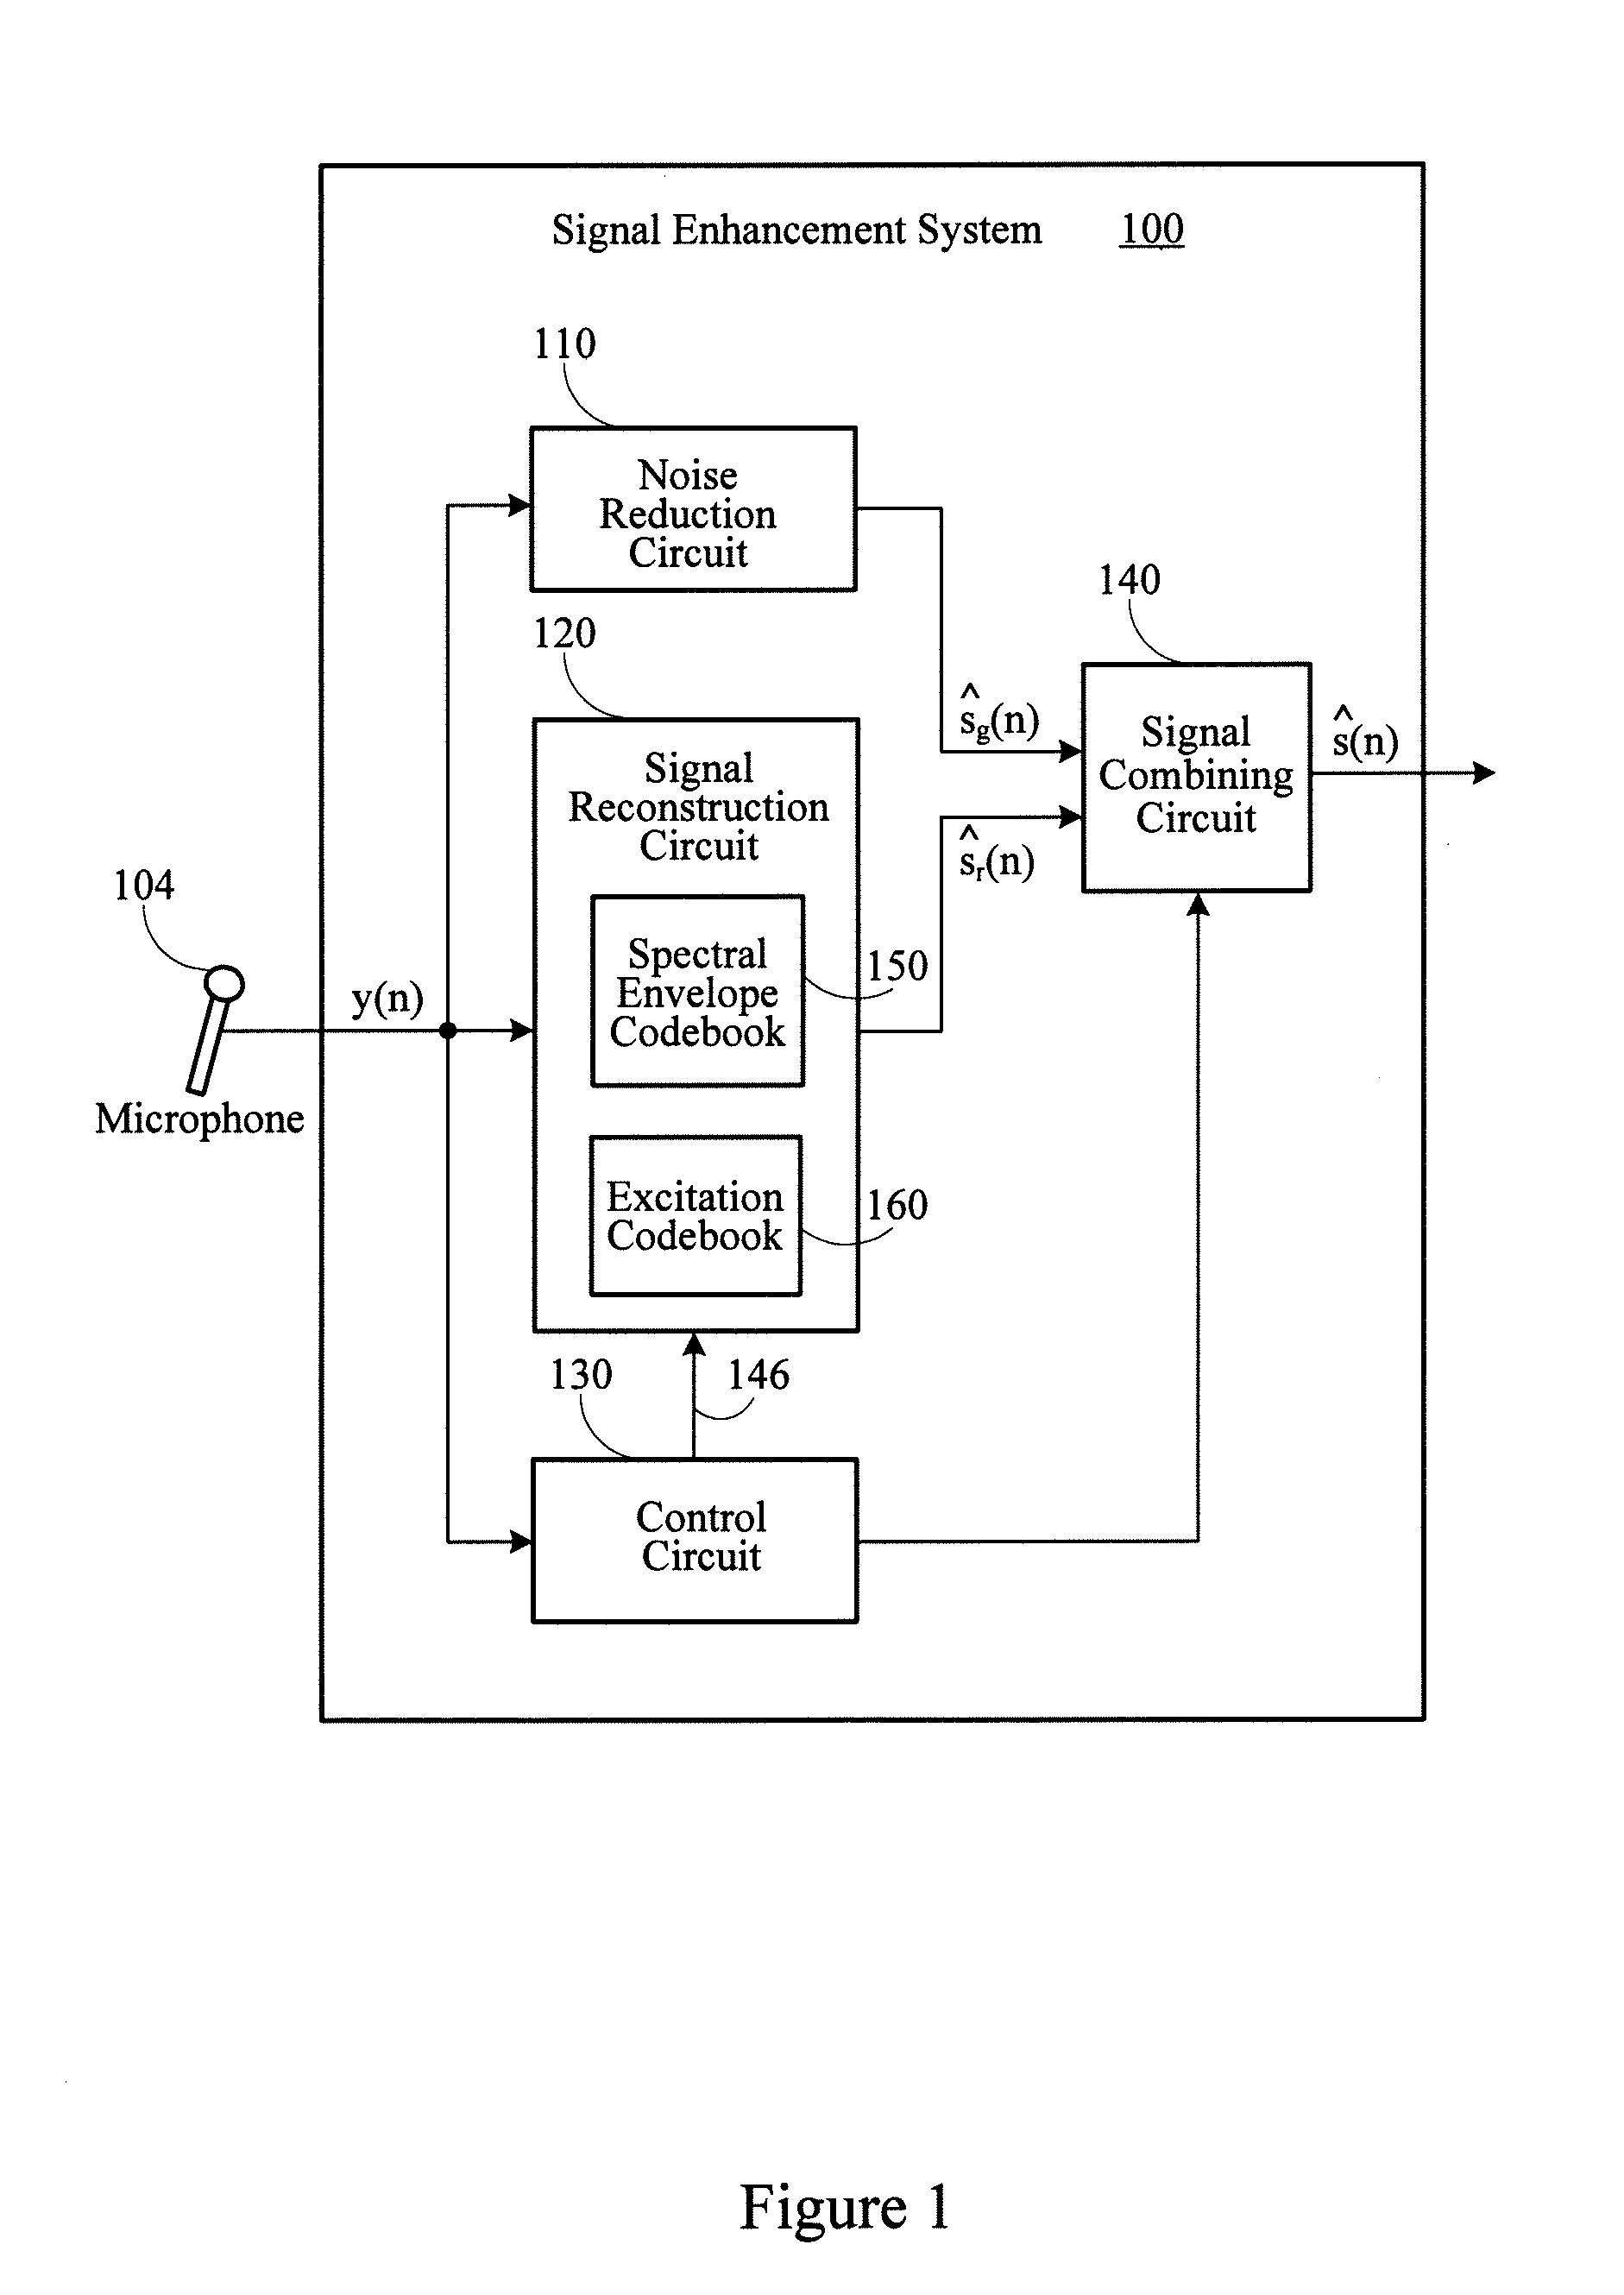 Model-based signal enhancement system